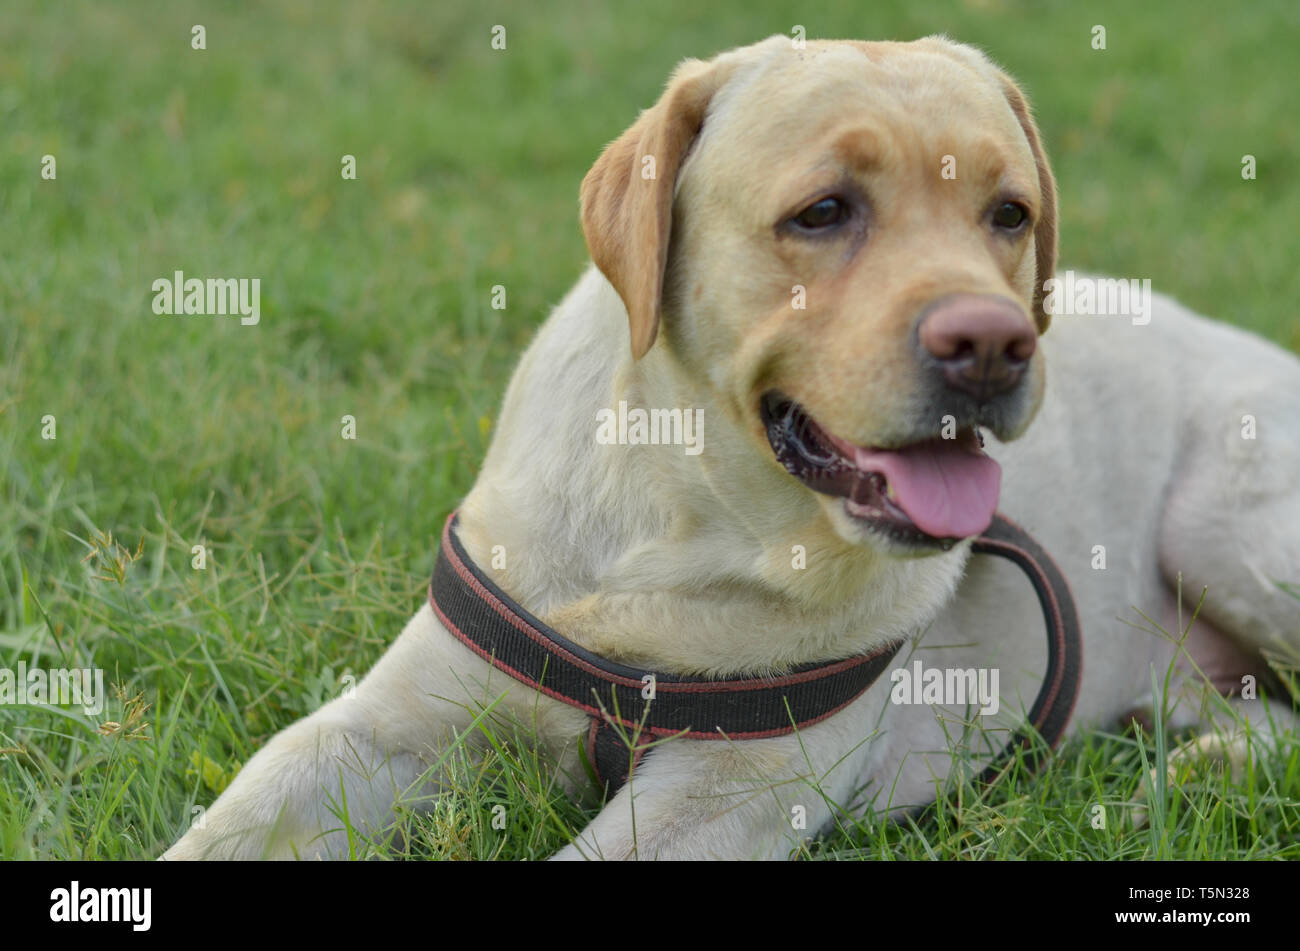 Innocent mignon labrador retriever dog sitting in a park Banque D'Images